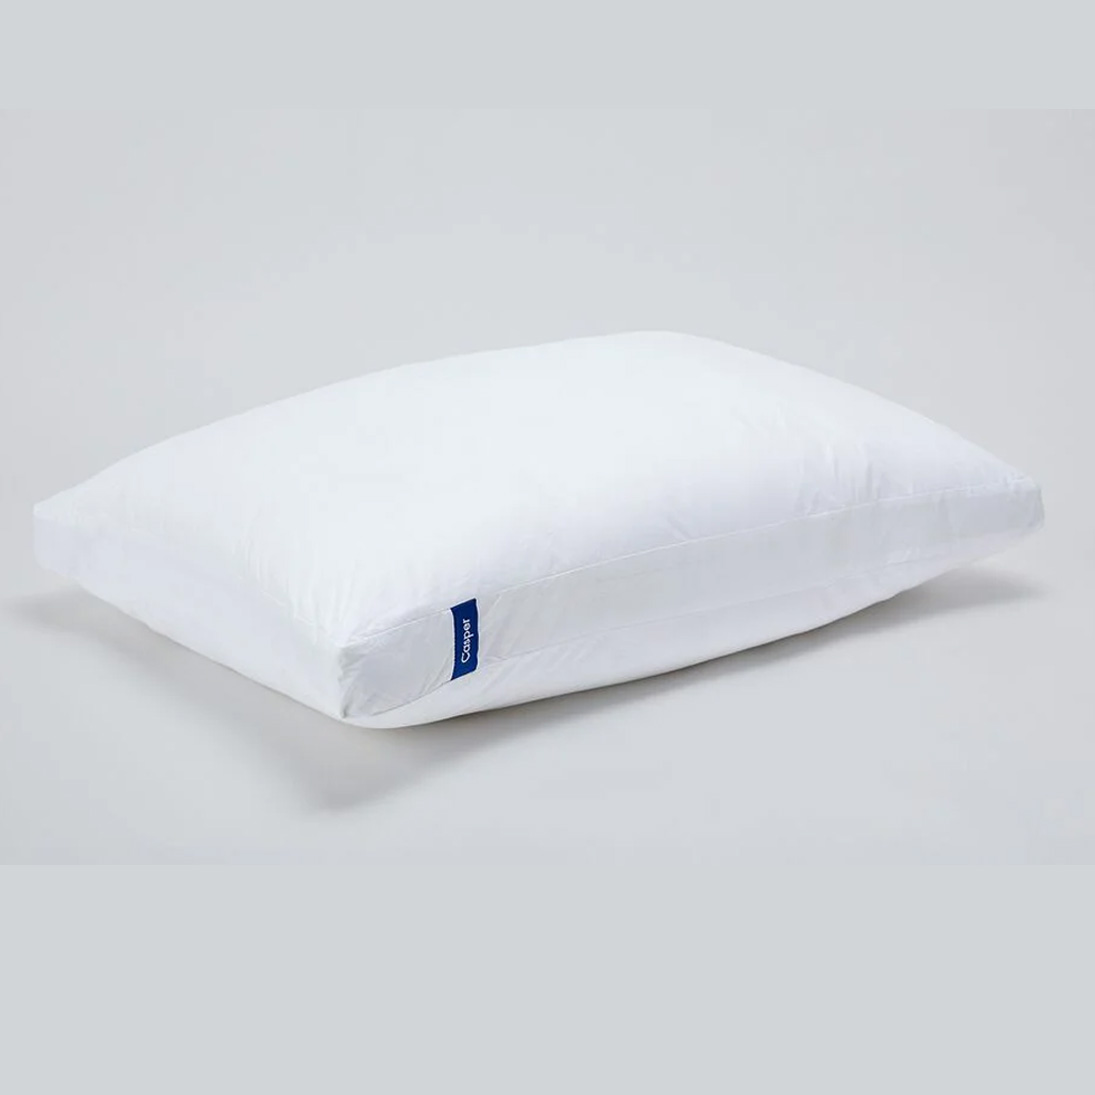 Original Casper Pillow in all white